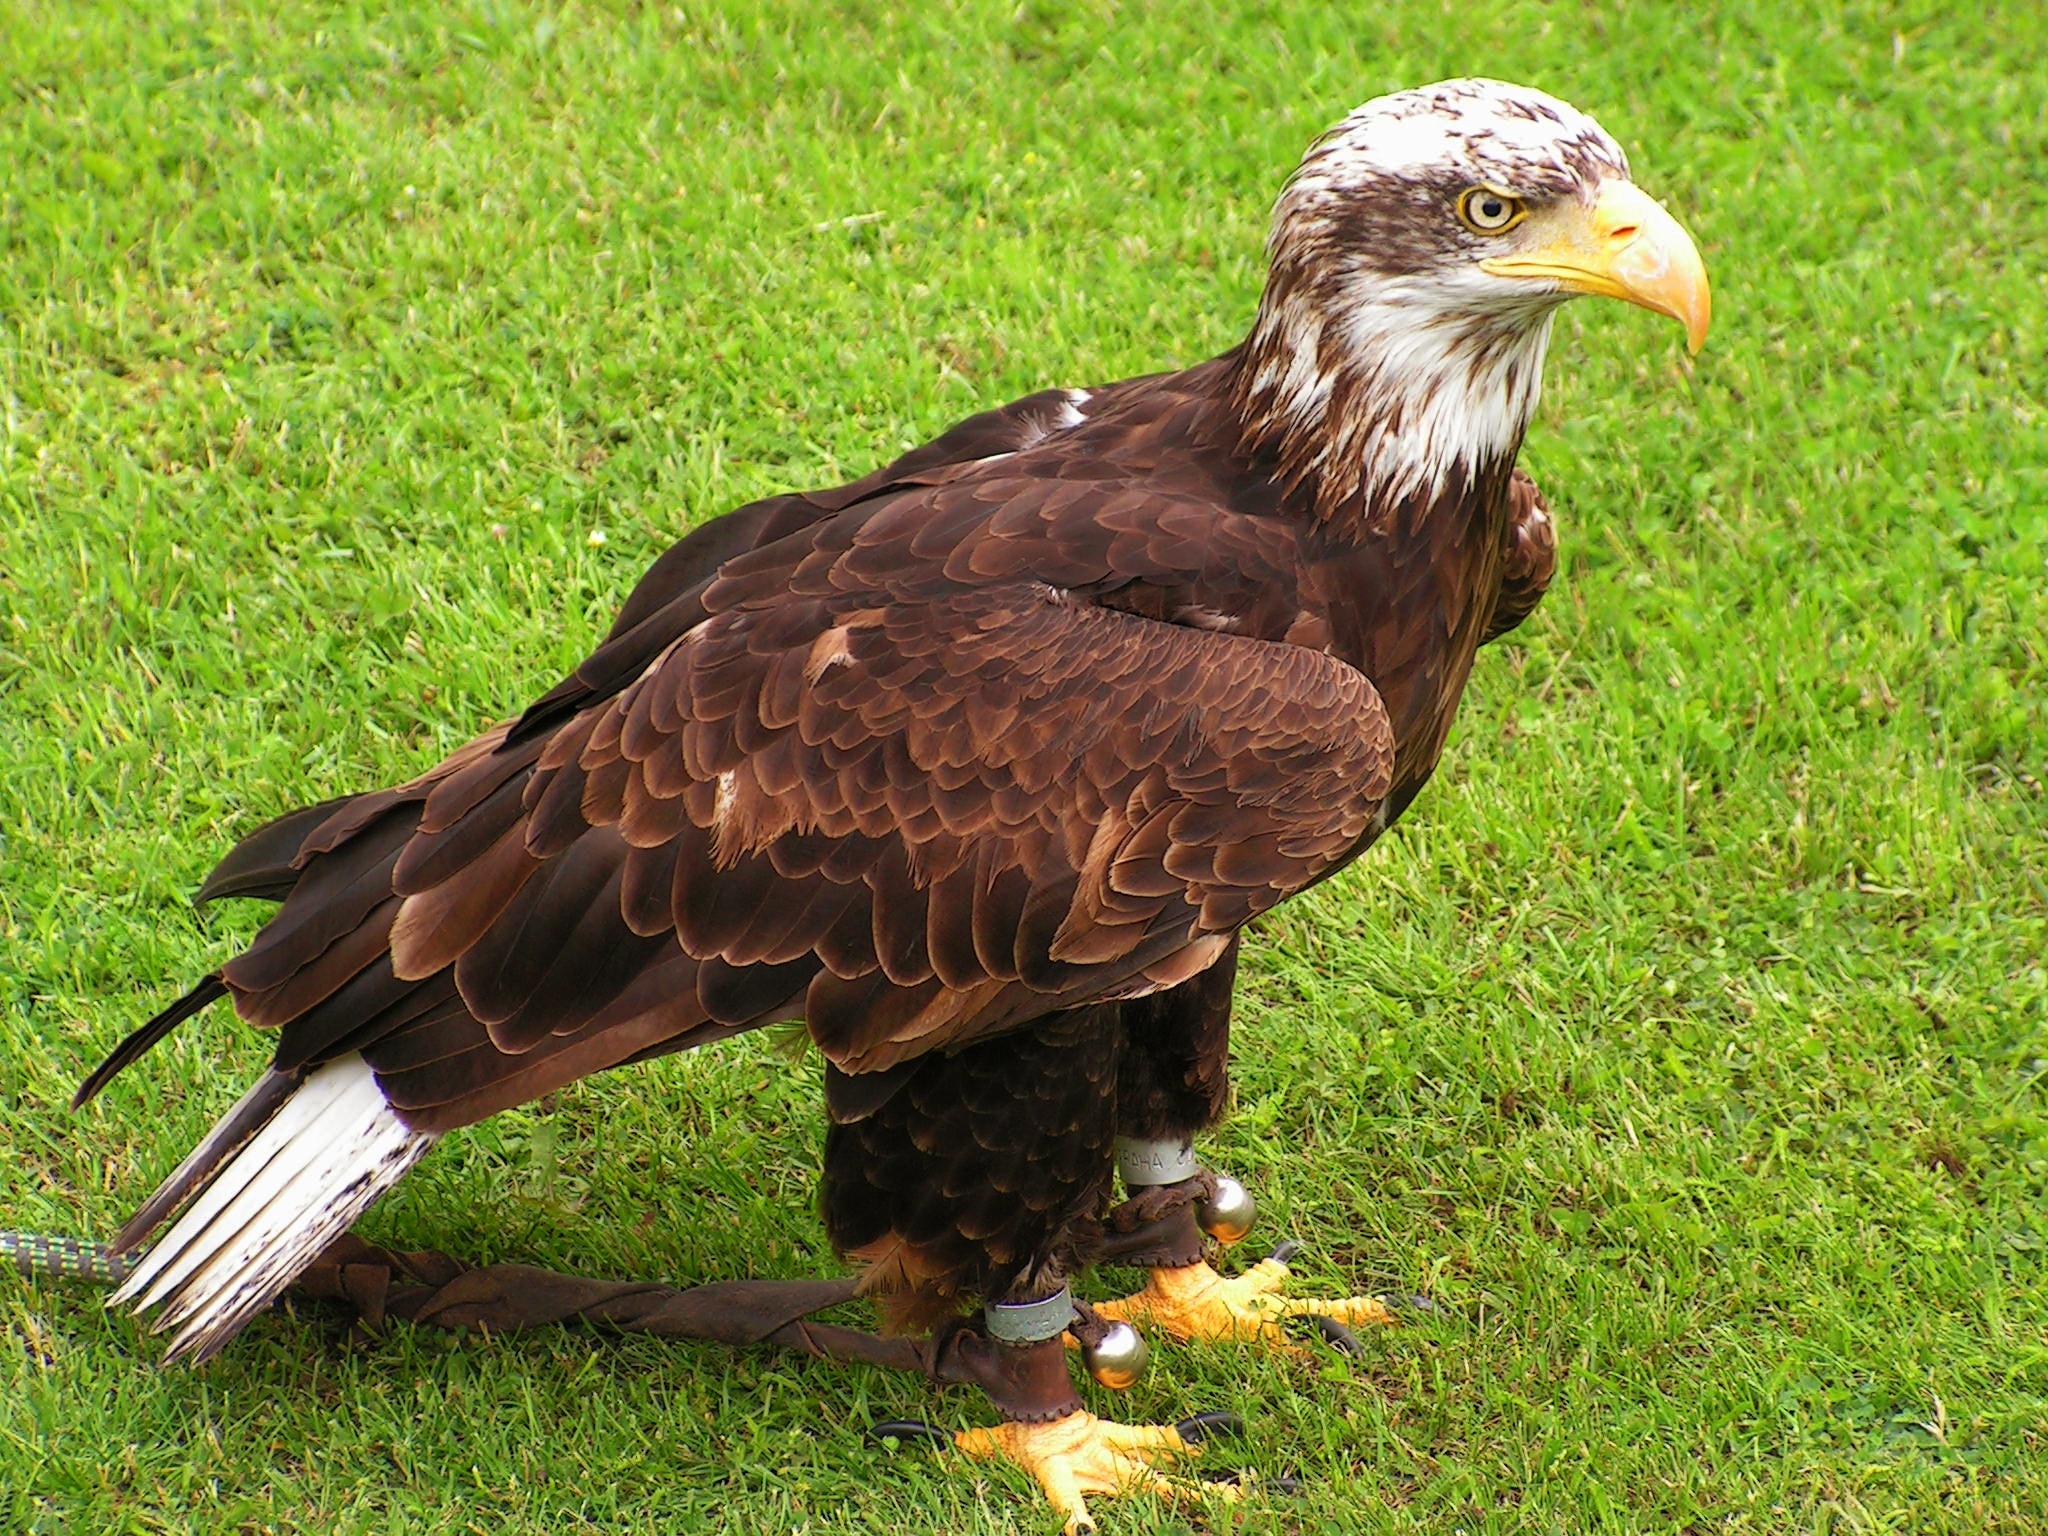 Predator, Bald Eagle, Eagle, Cub, Bird, grass, one animal